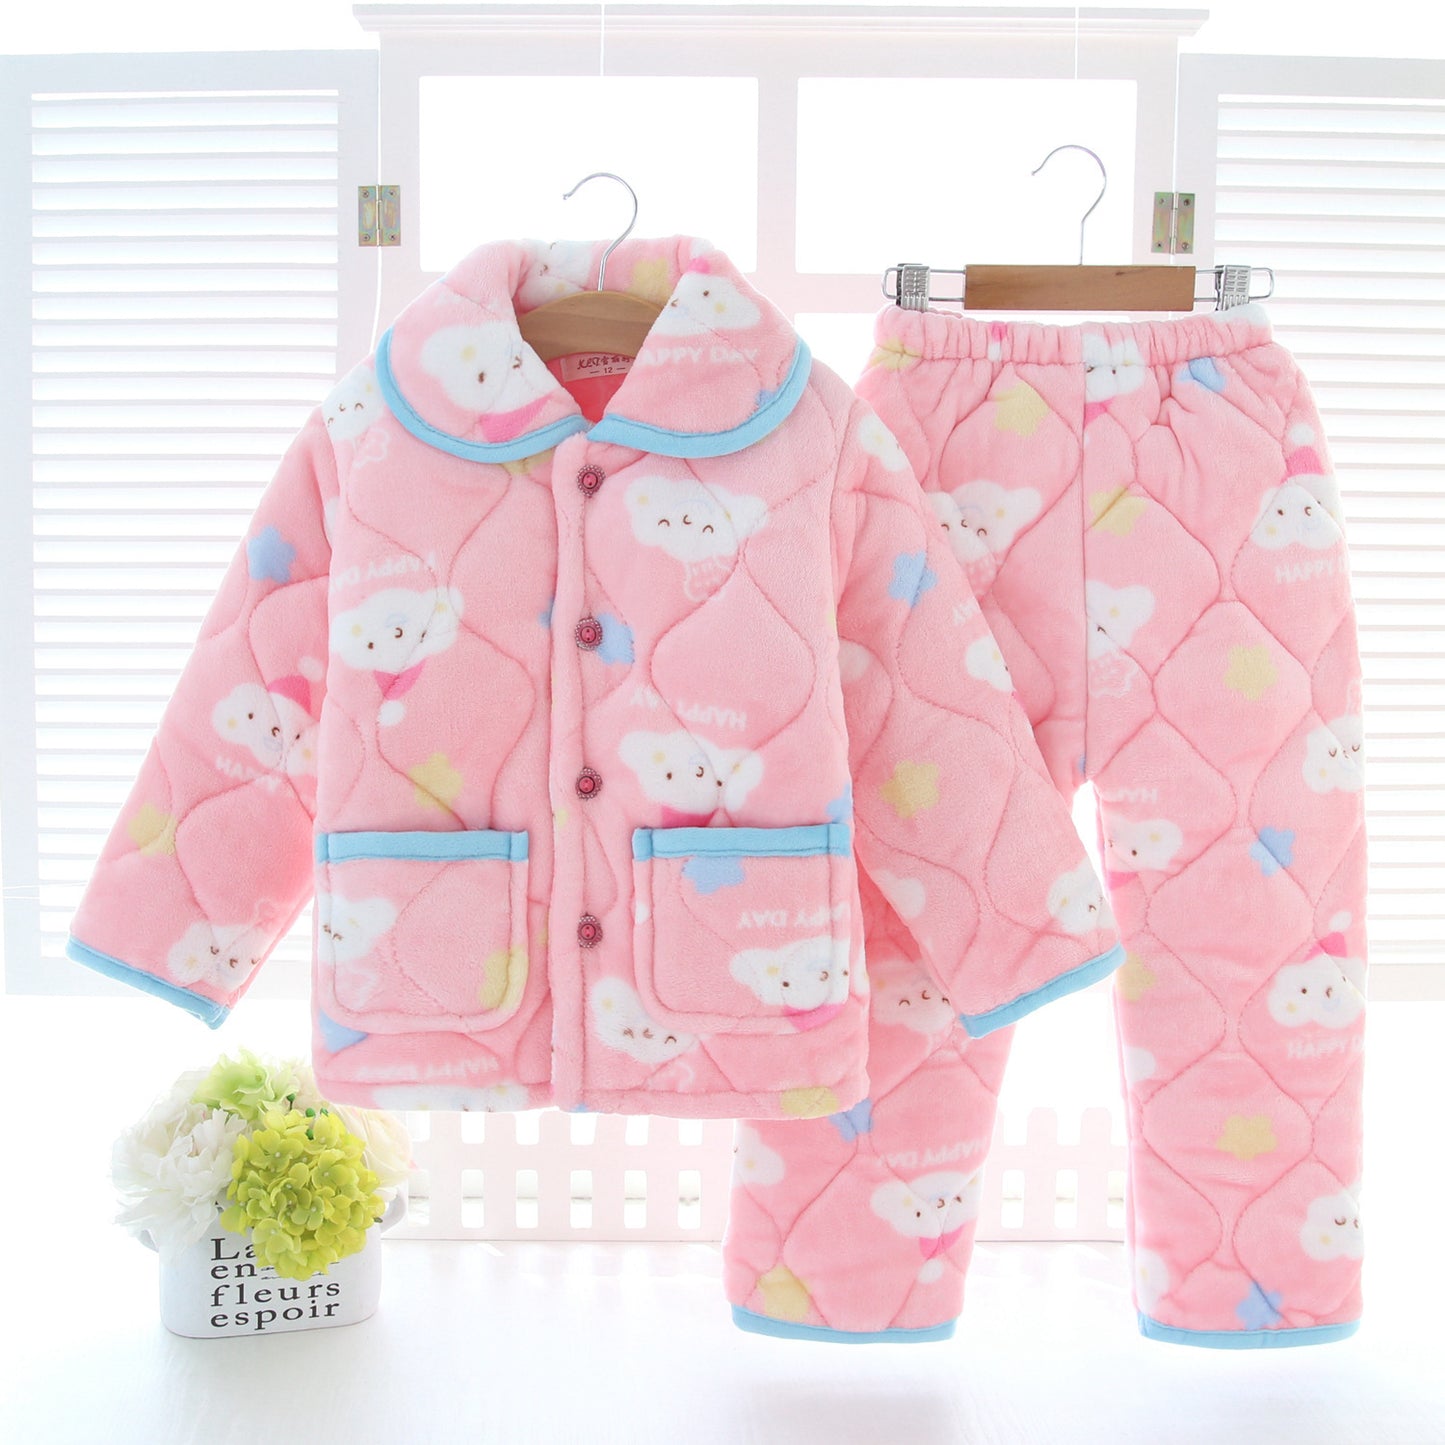 Children's warm pajamas set